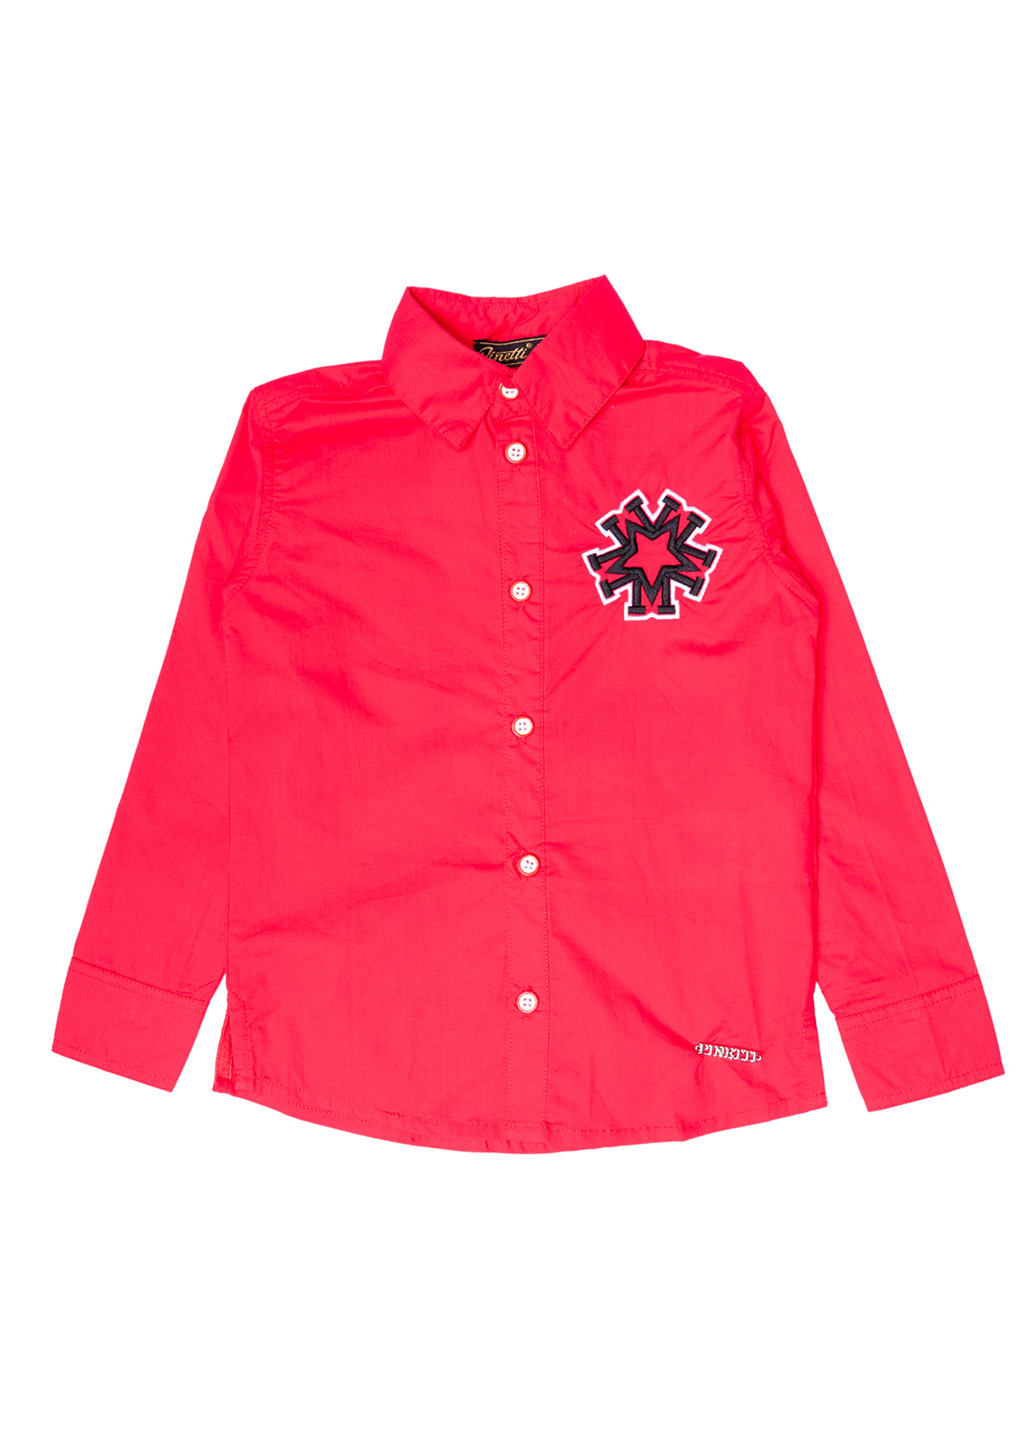 Красная кэжуал рубашка с рисунком Pinetti с длинным рукавом